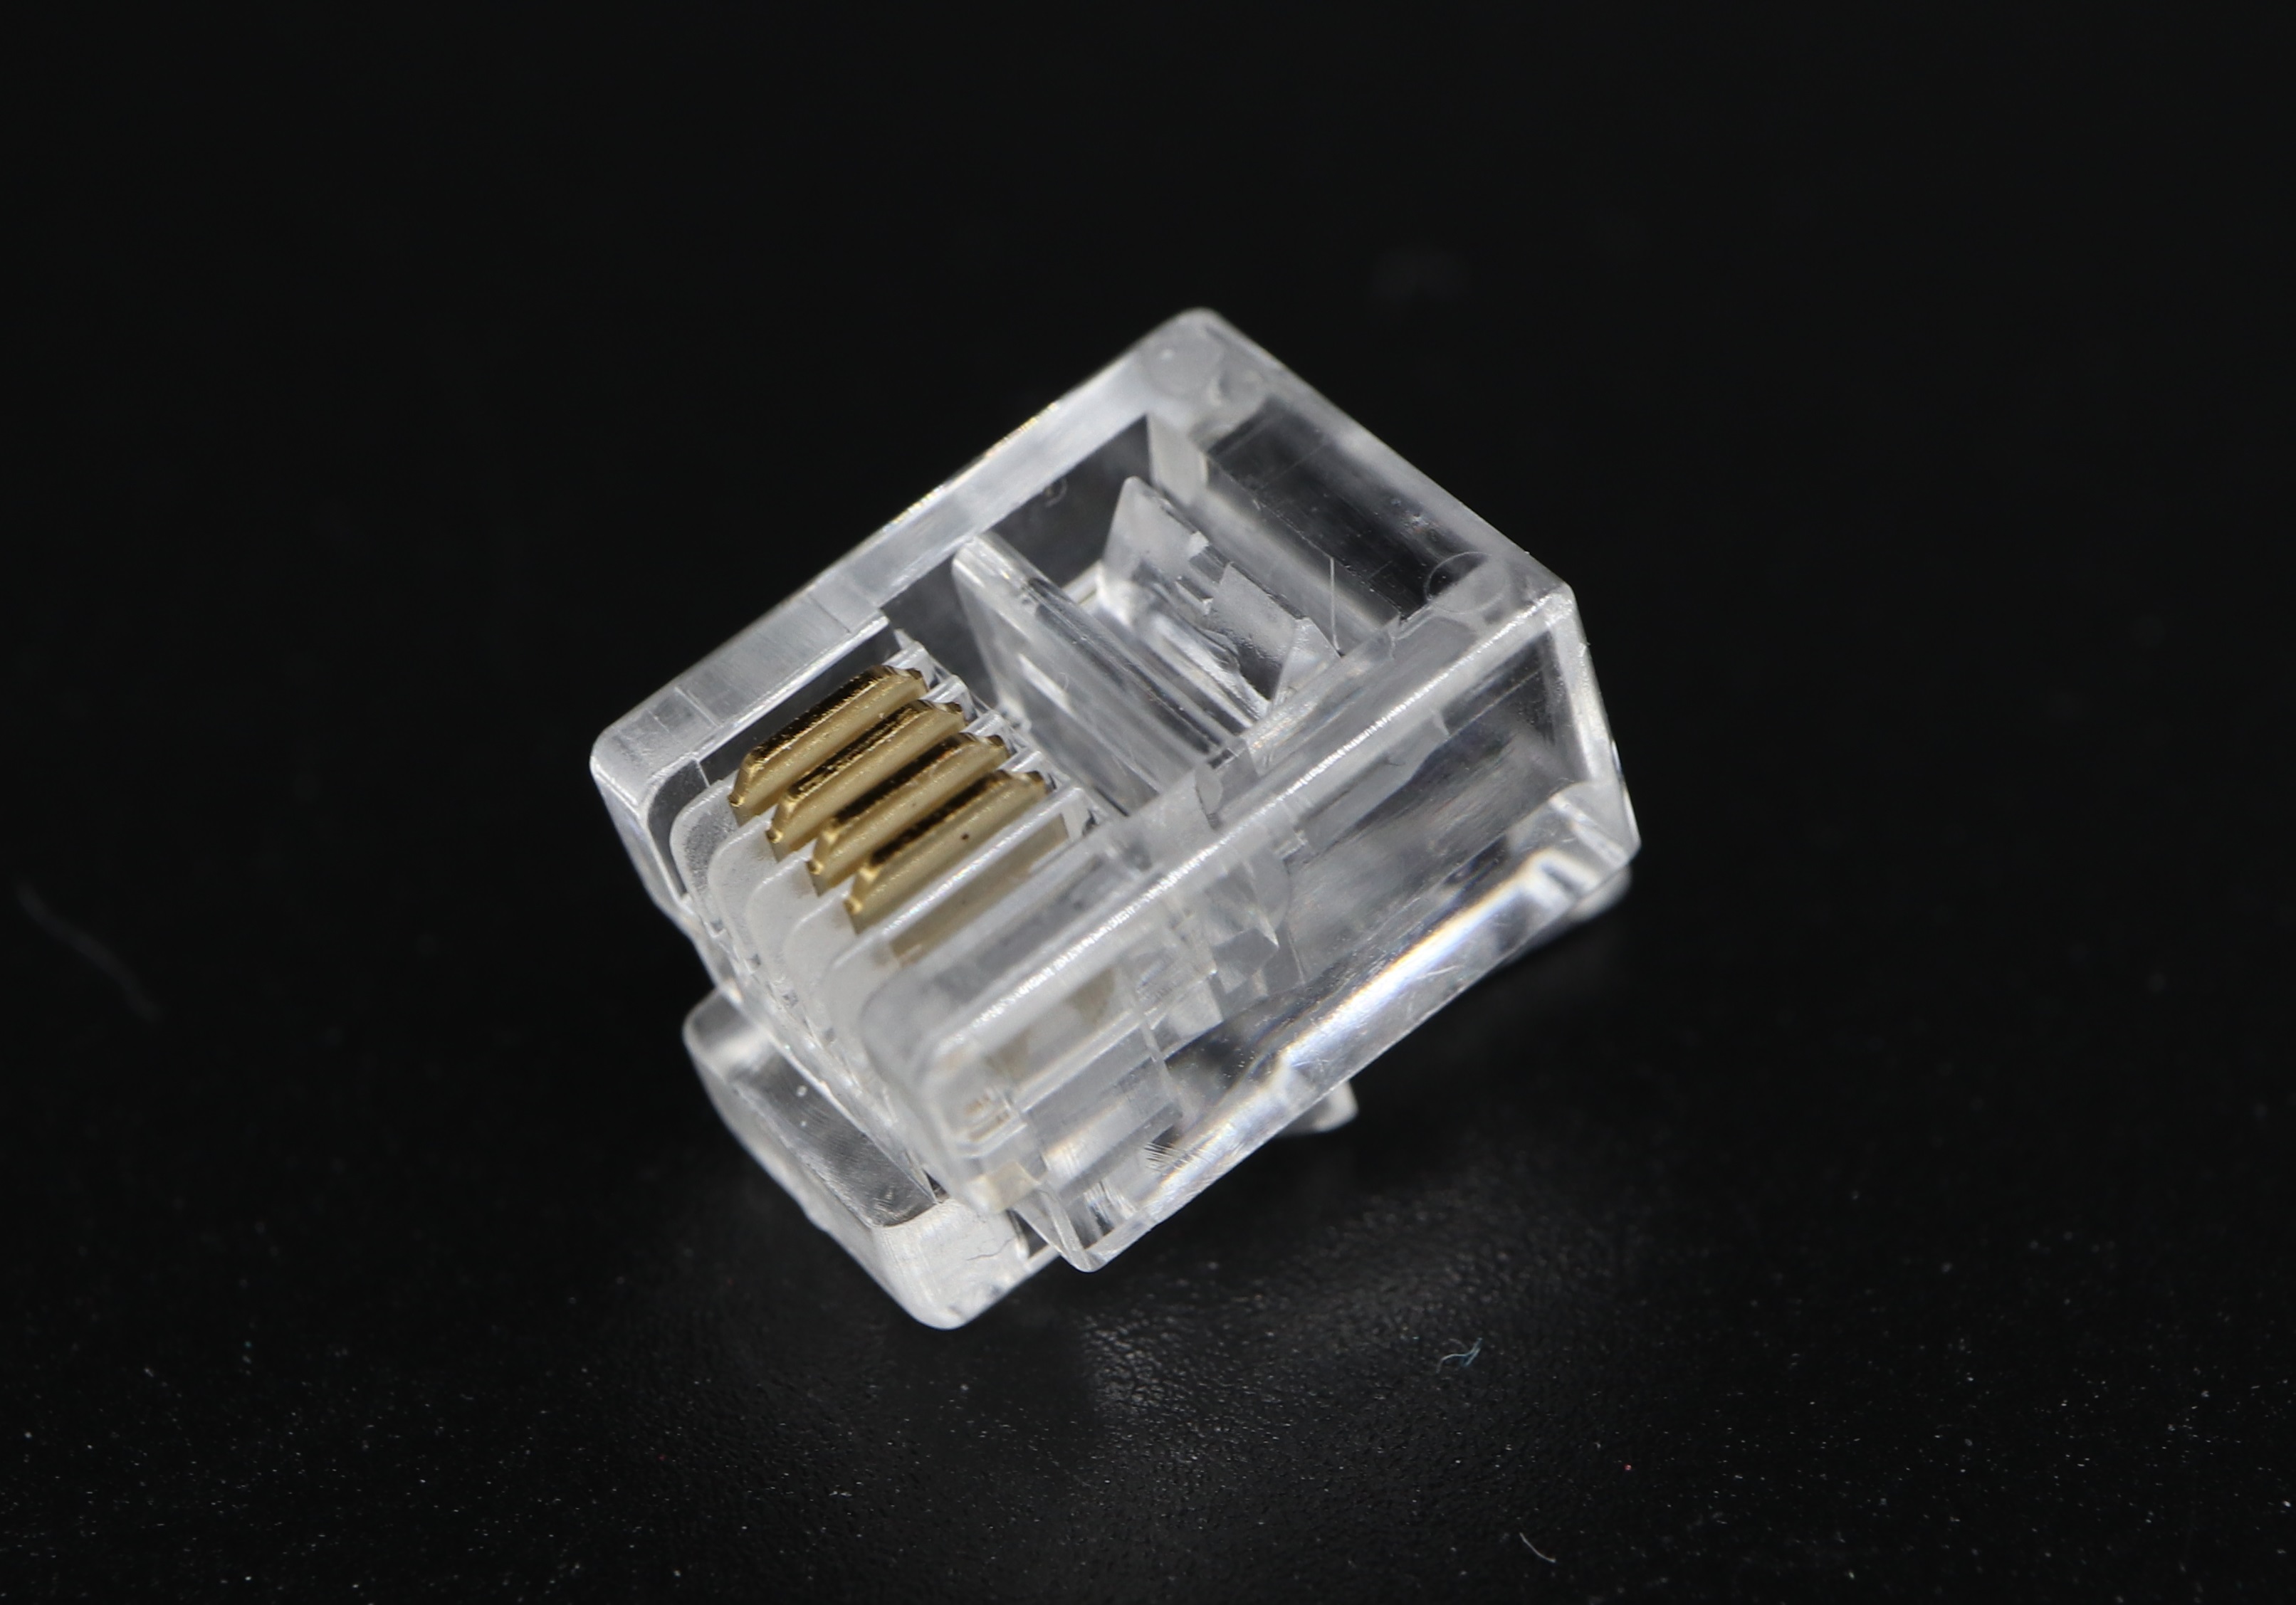 P6-003 - Modular plugs